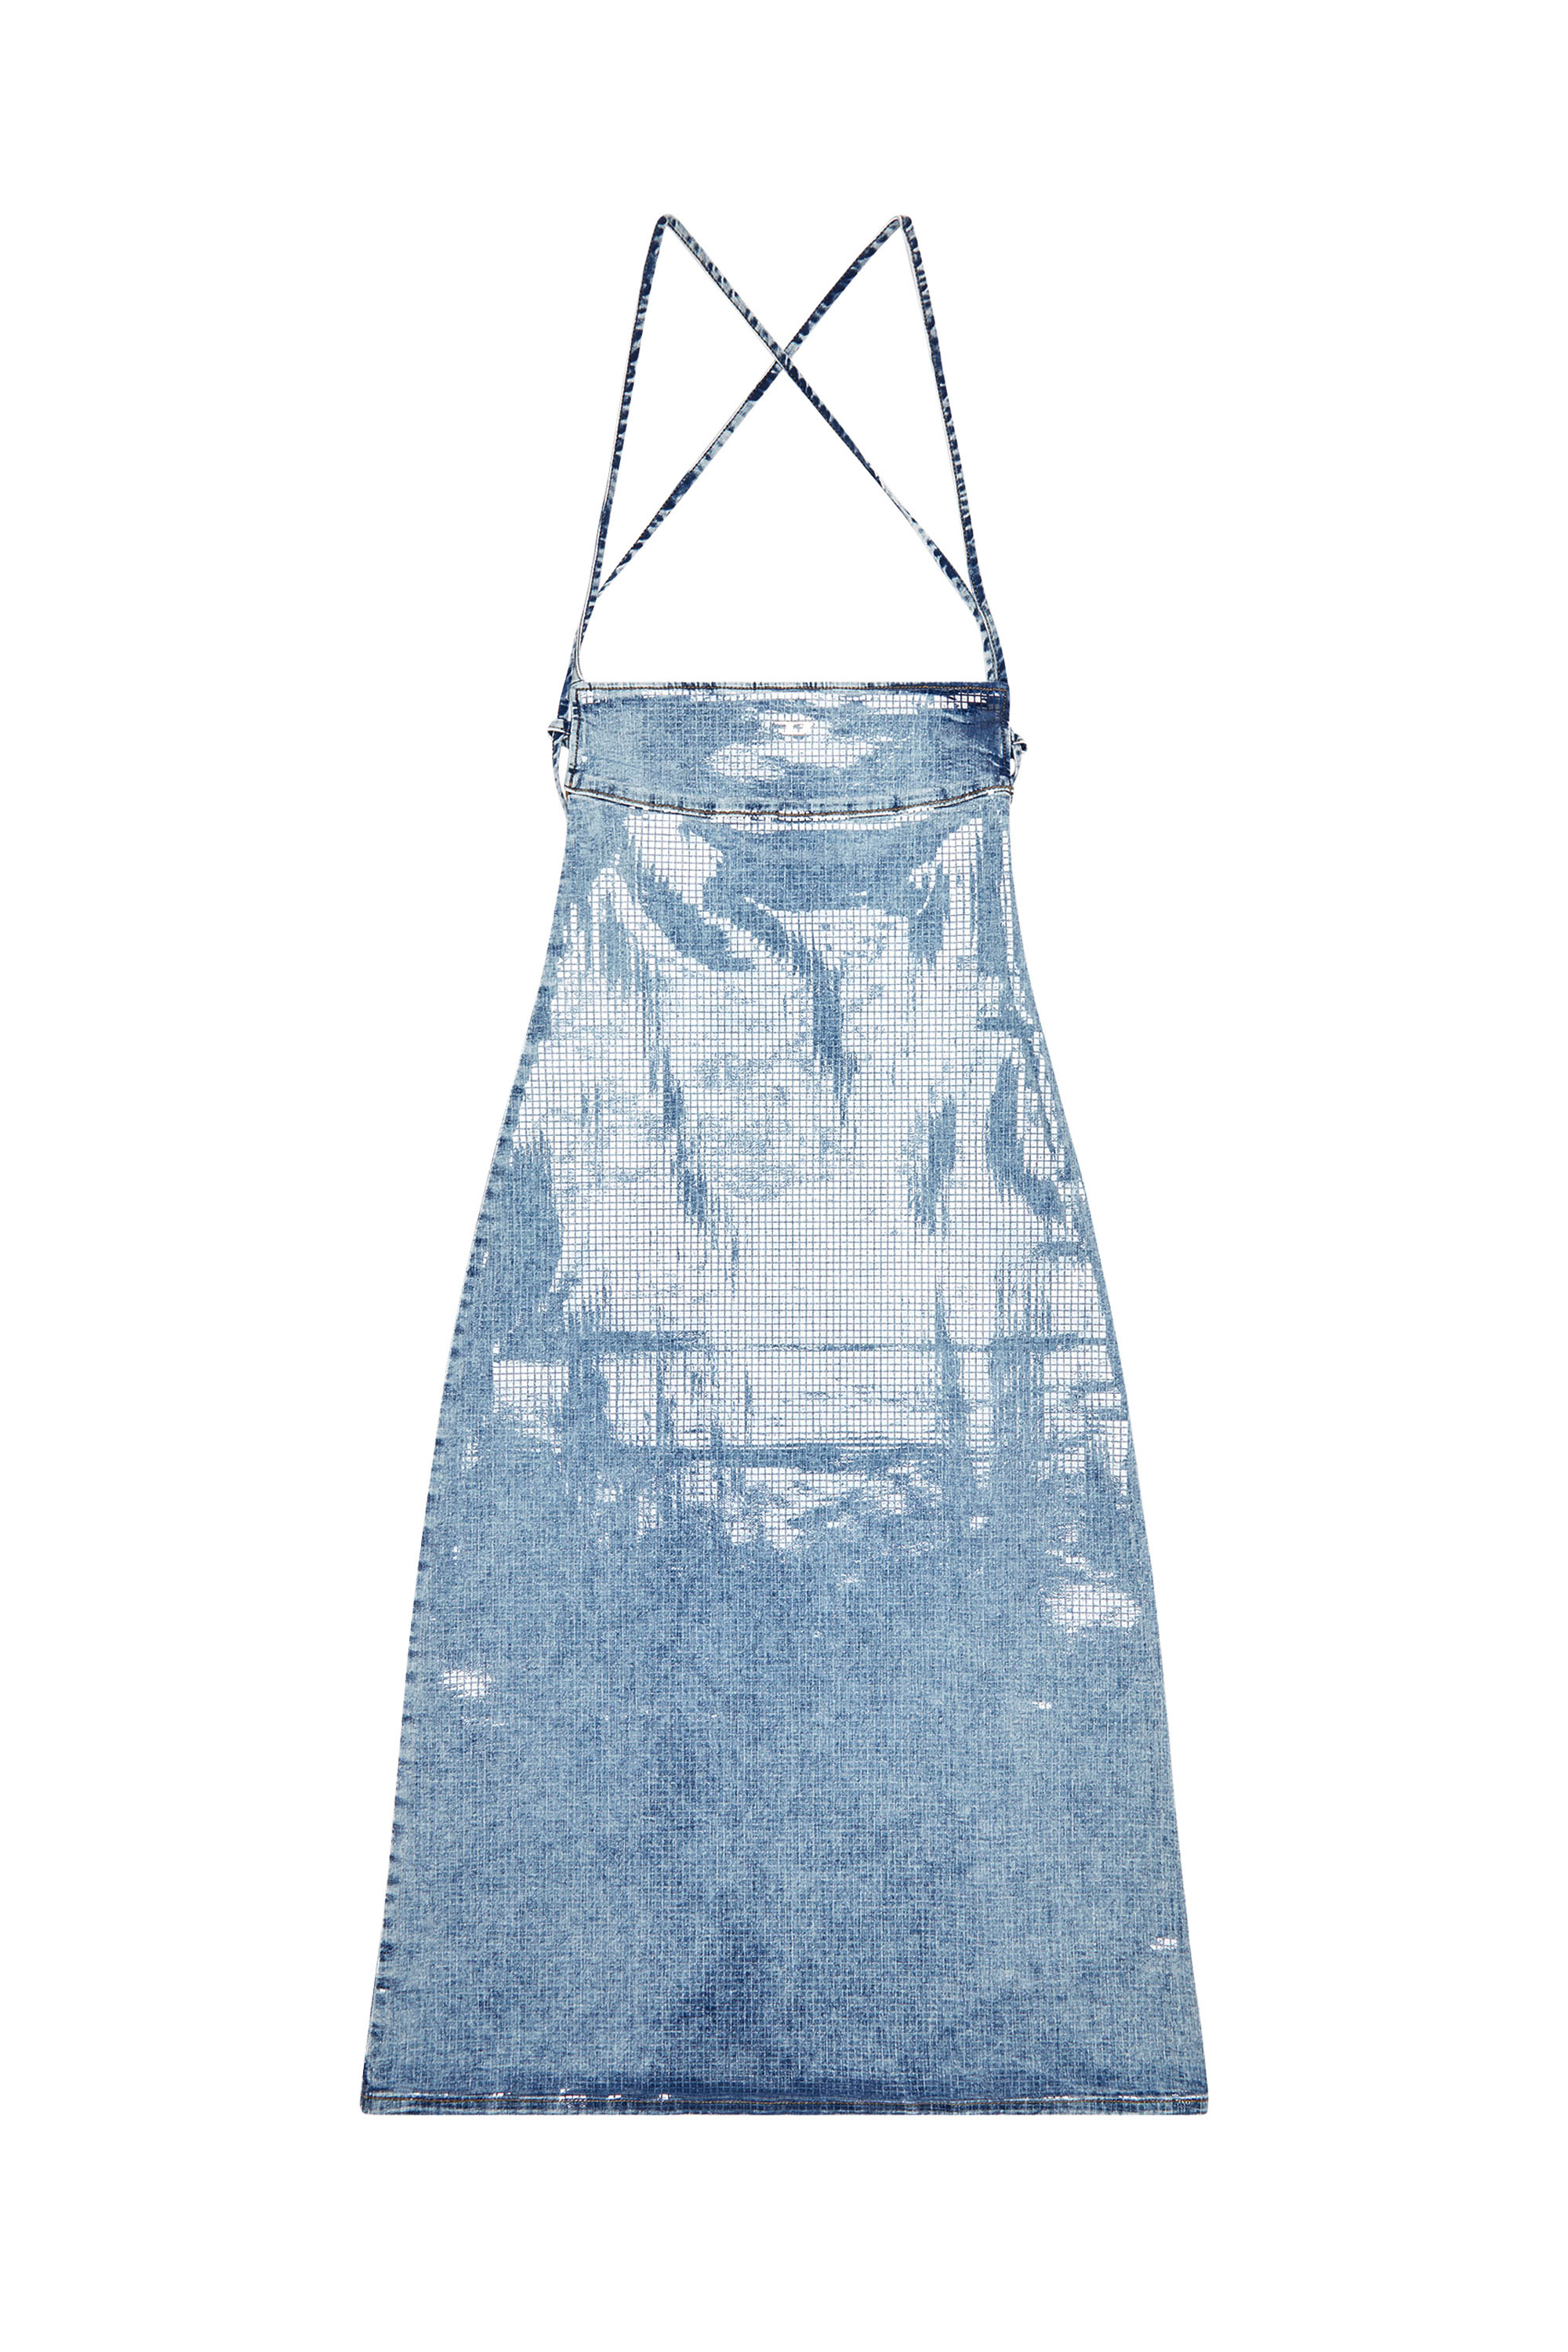 Diesel - DE-HELD-S, Woman Strappy midi dress in sequin denim in Blue - Image 4